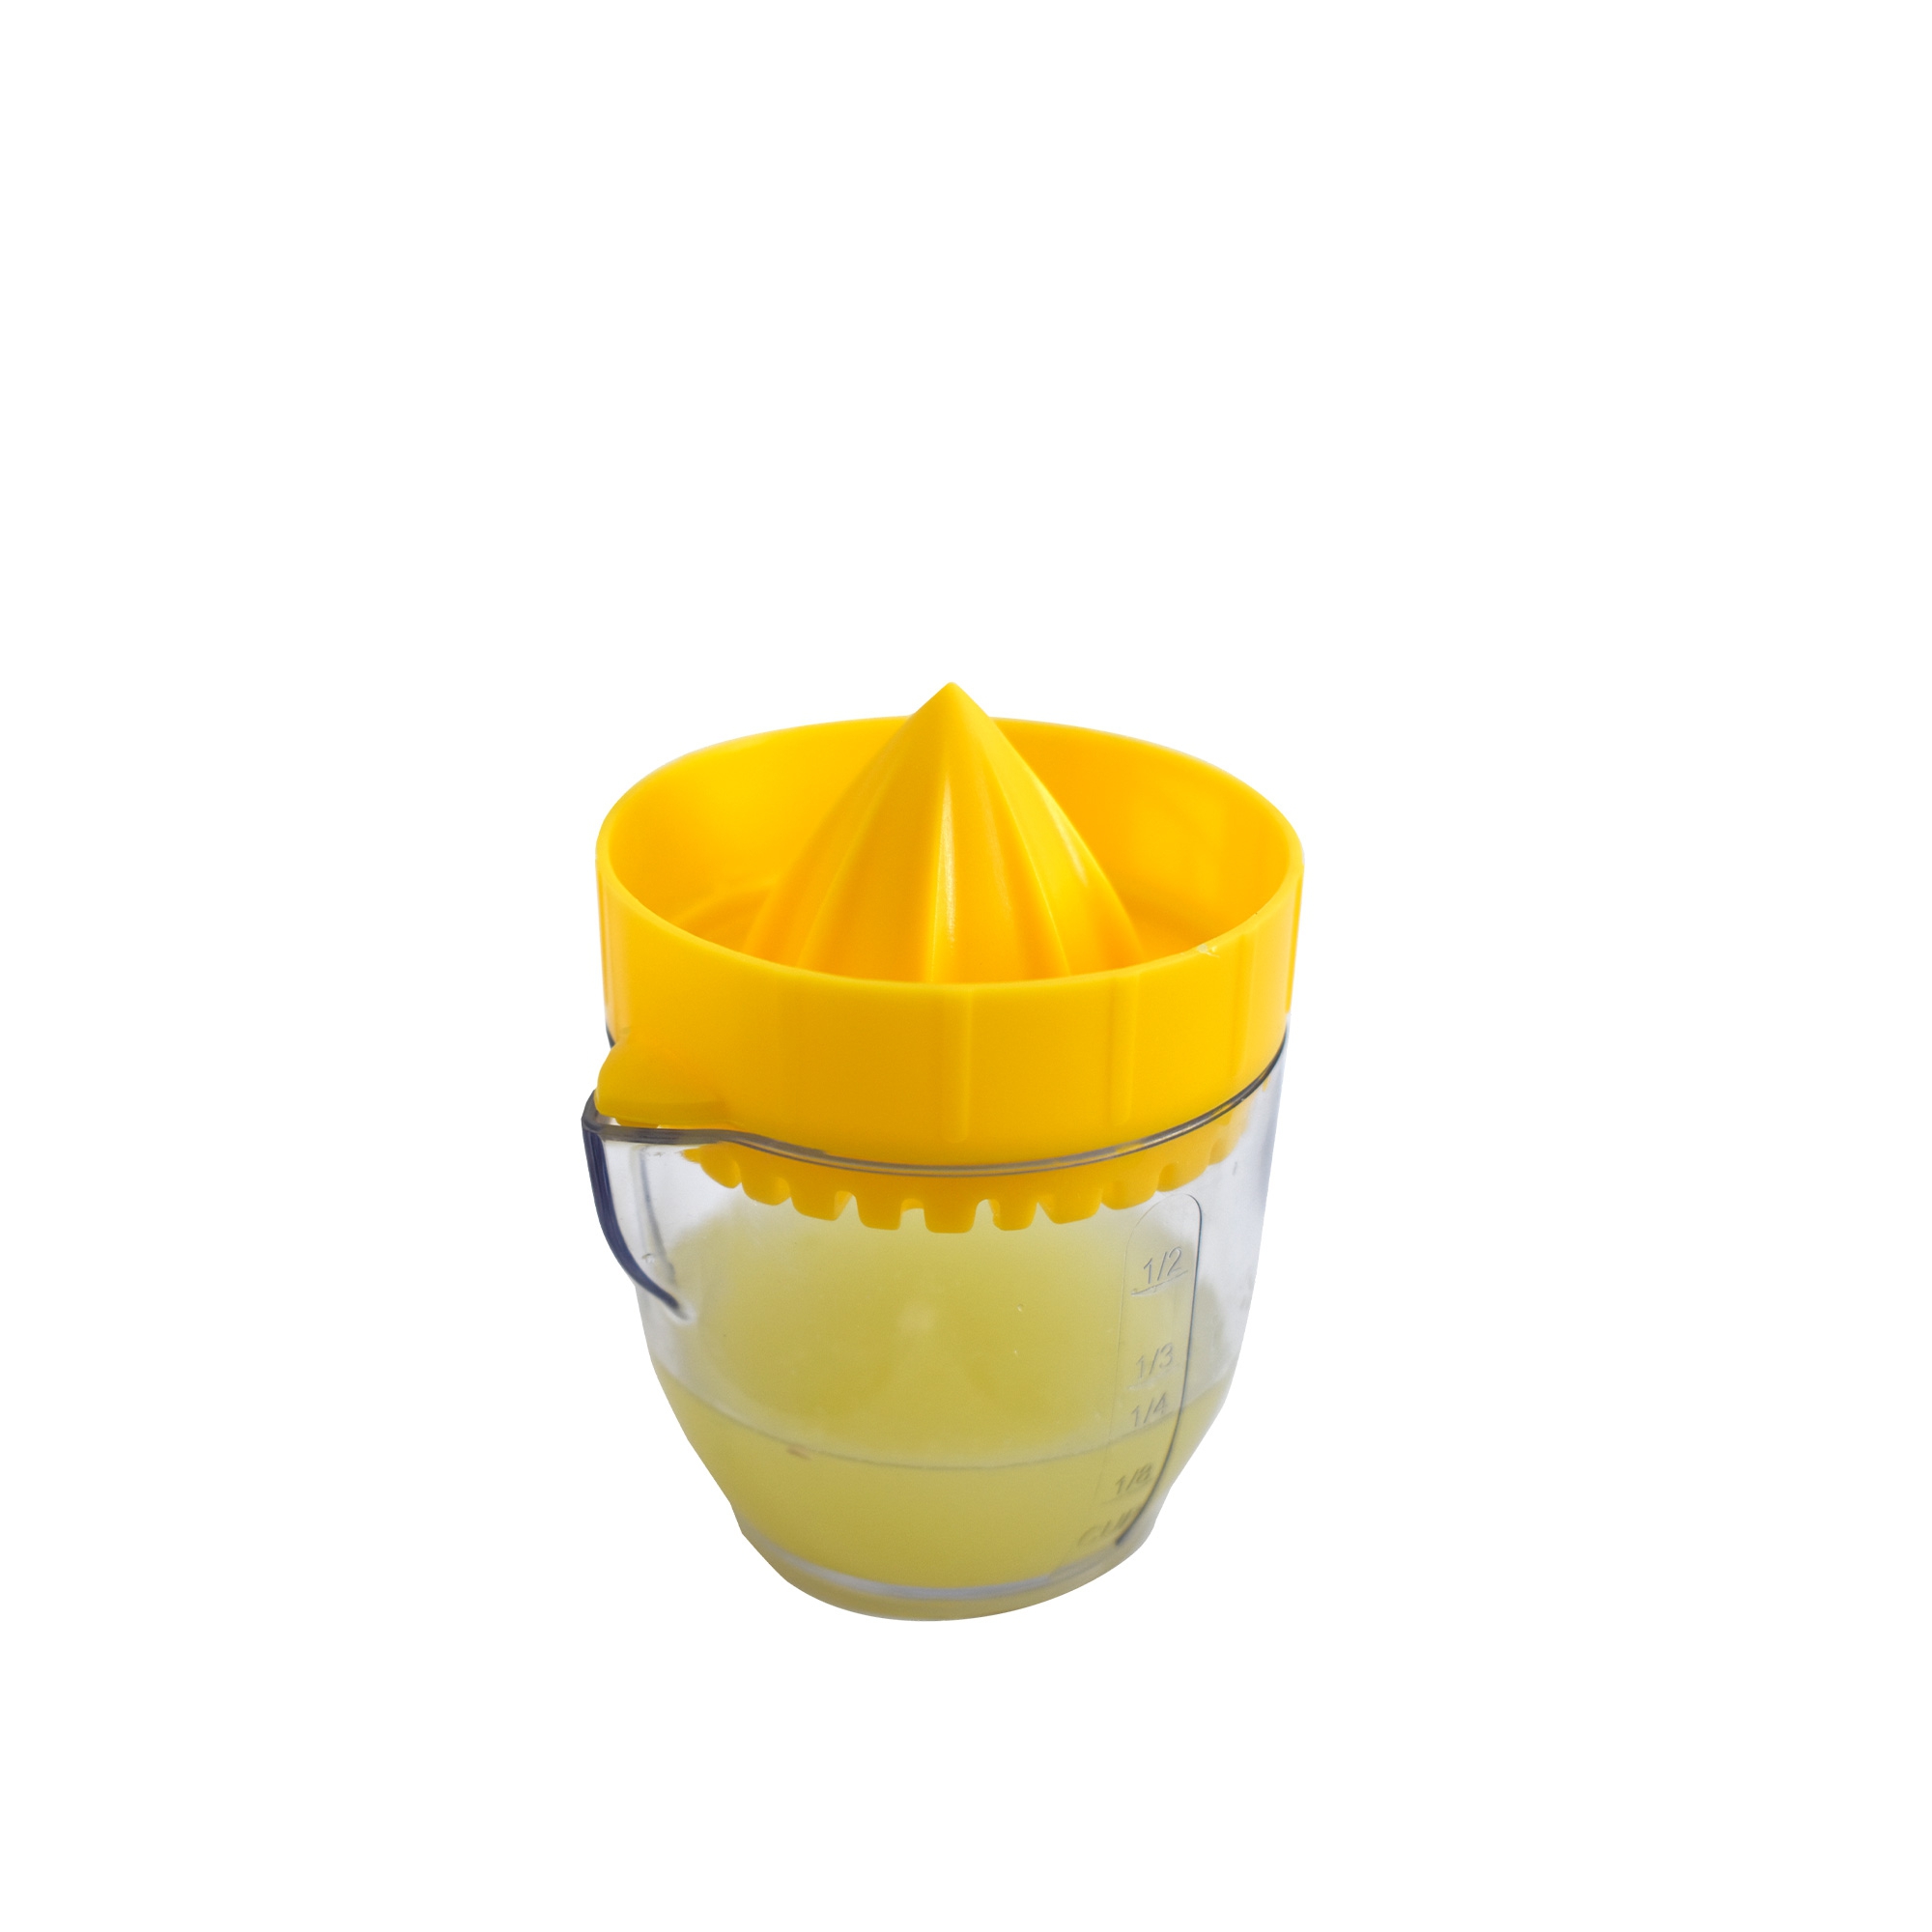 Jade - citrus press with lid - yellow